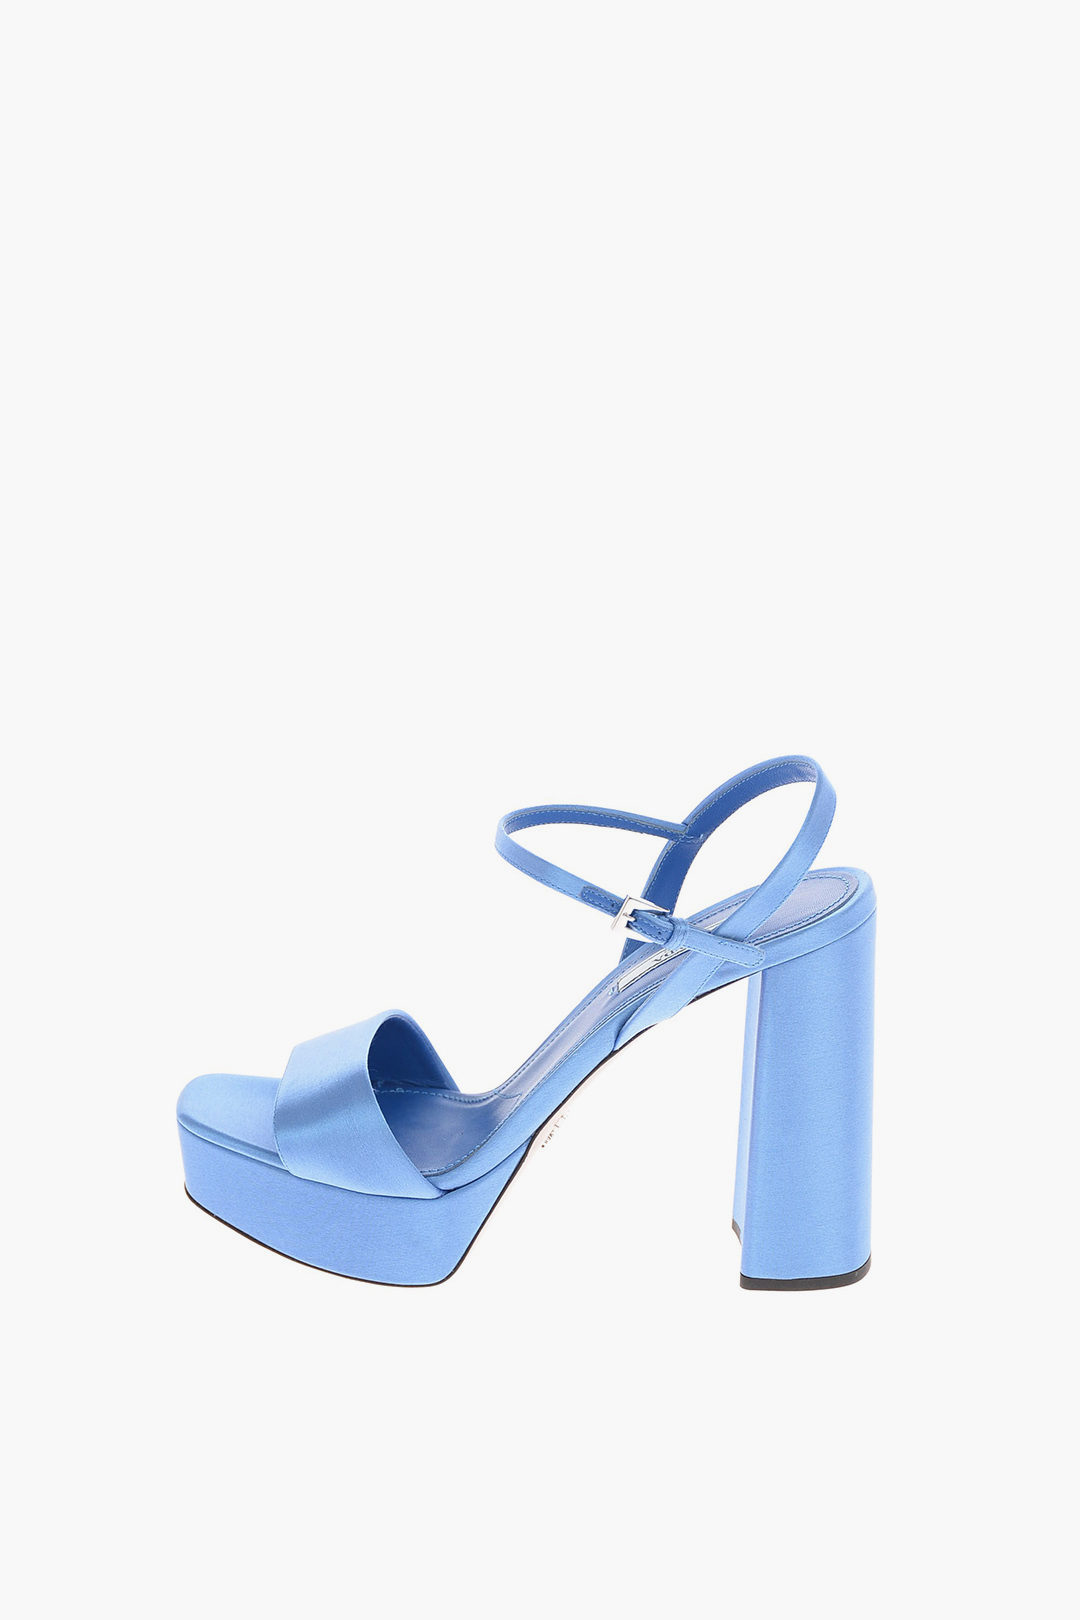 Prada Satin Platform Sandals with Ankle Strap 12 Cm women - Glamood Outlet